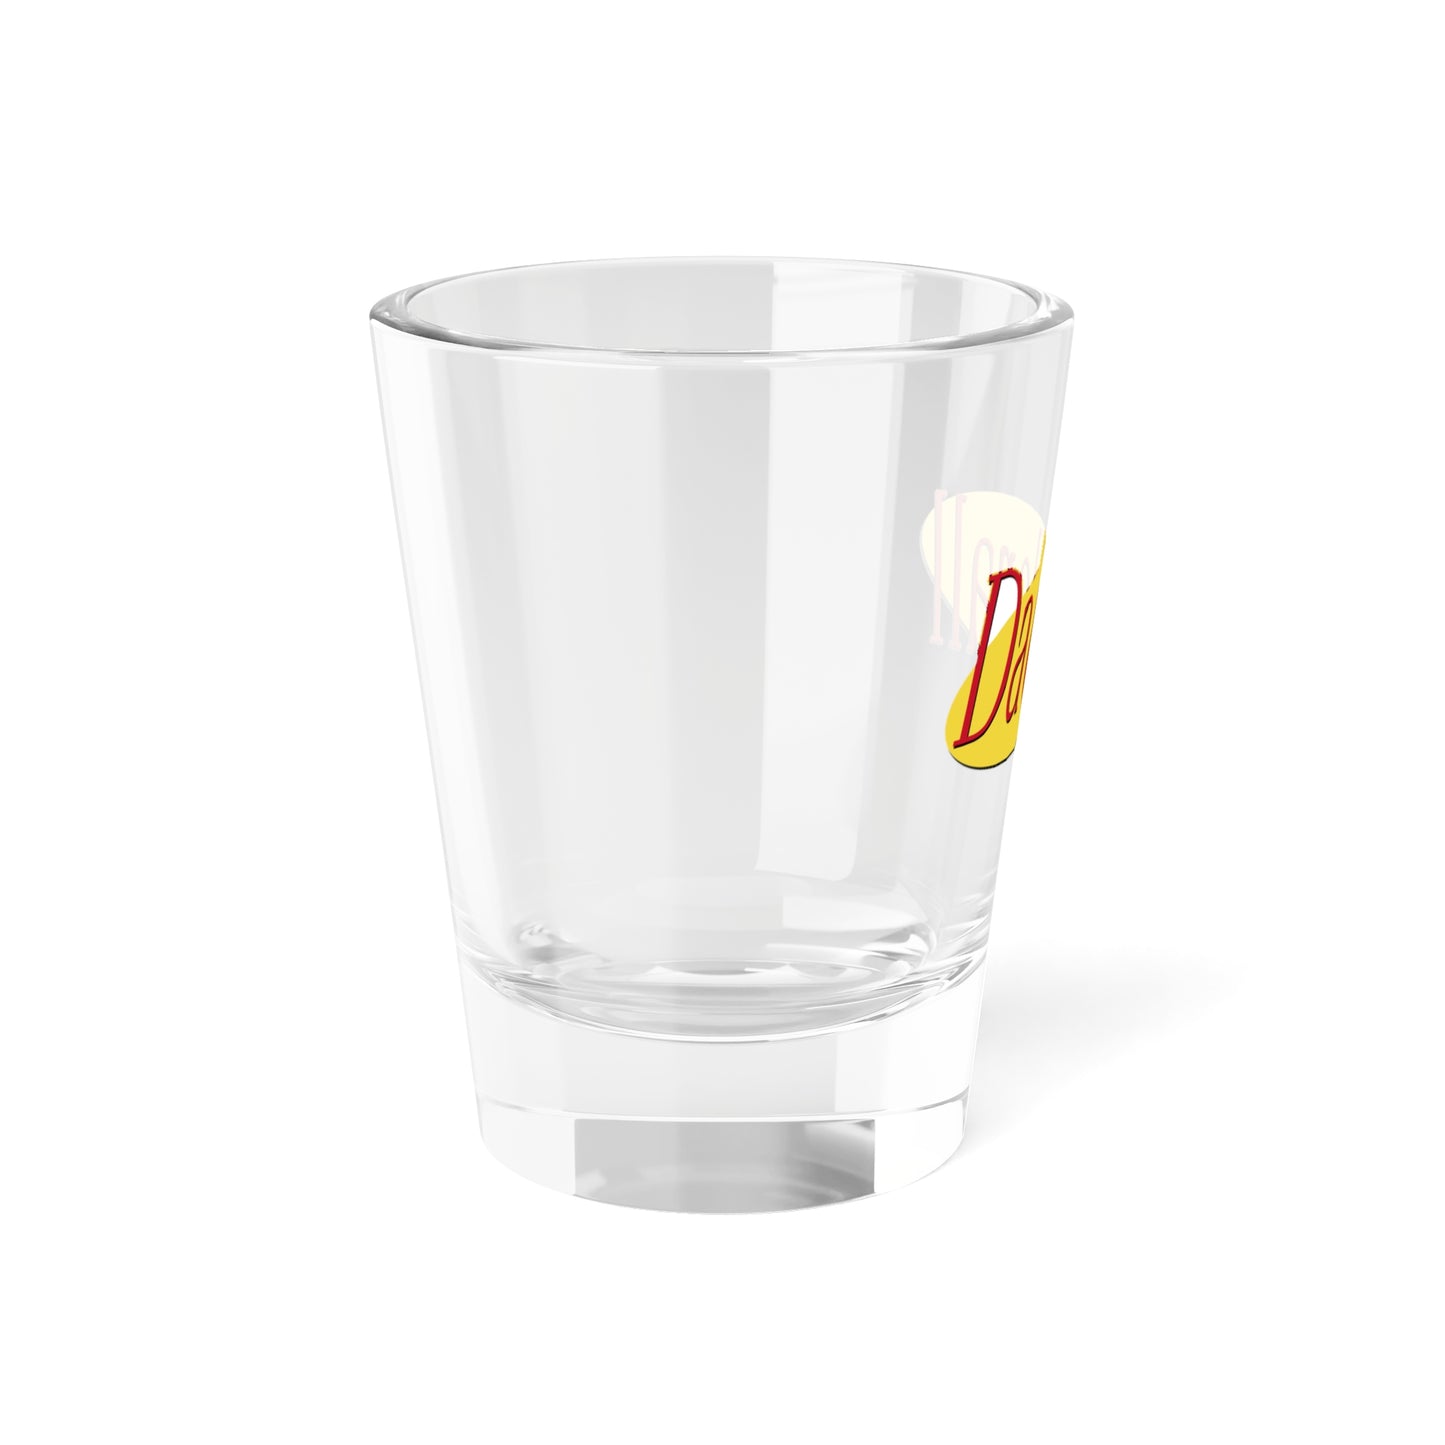 Daddfeld Shot Glass, 1.5oz